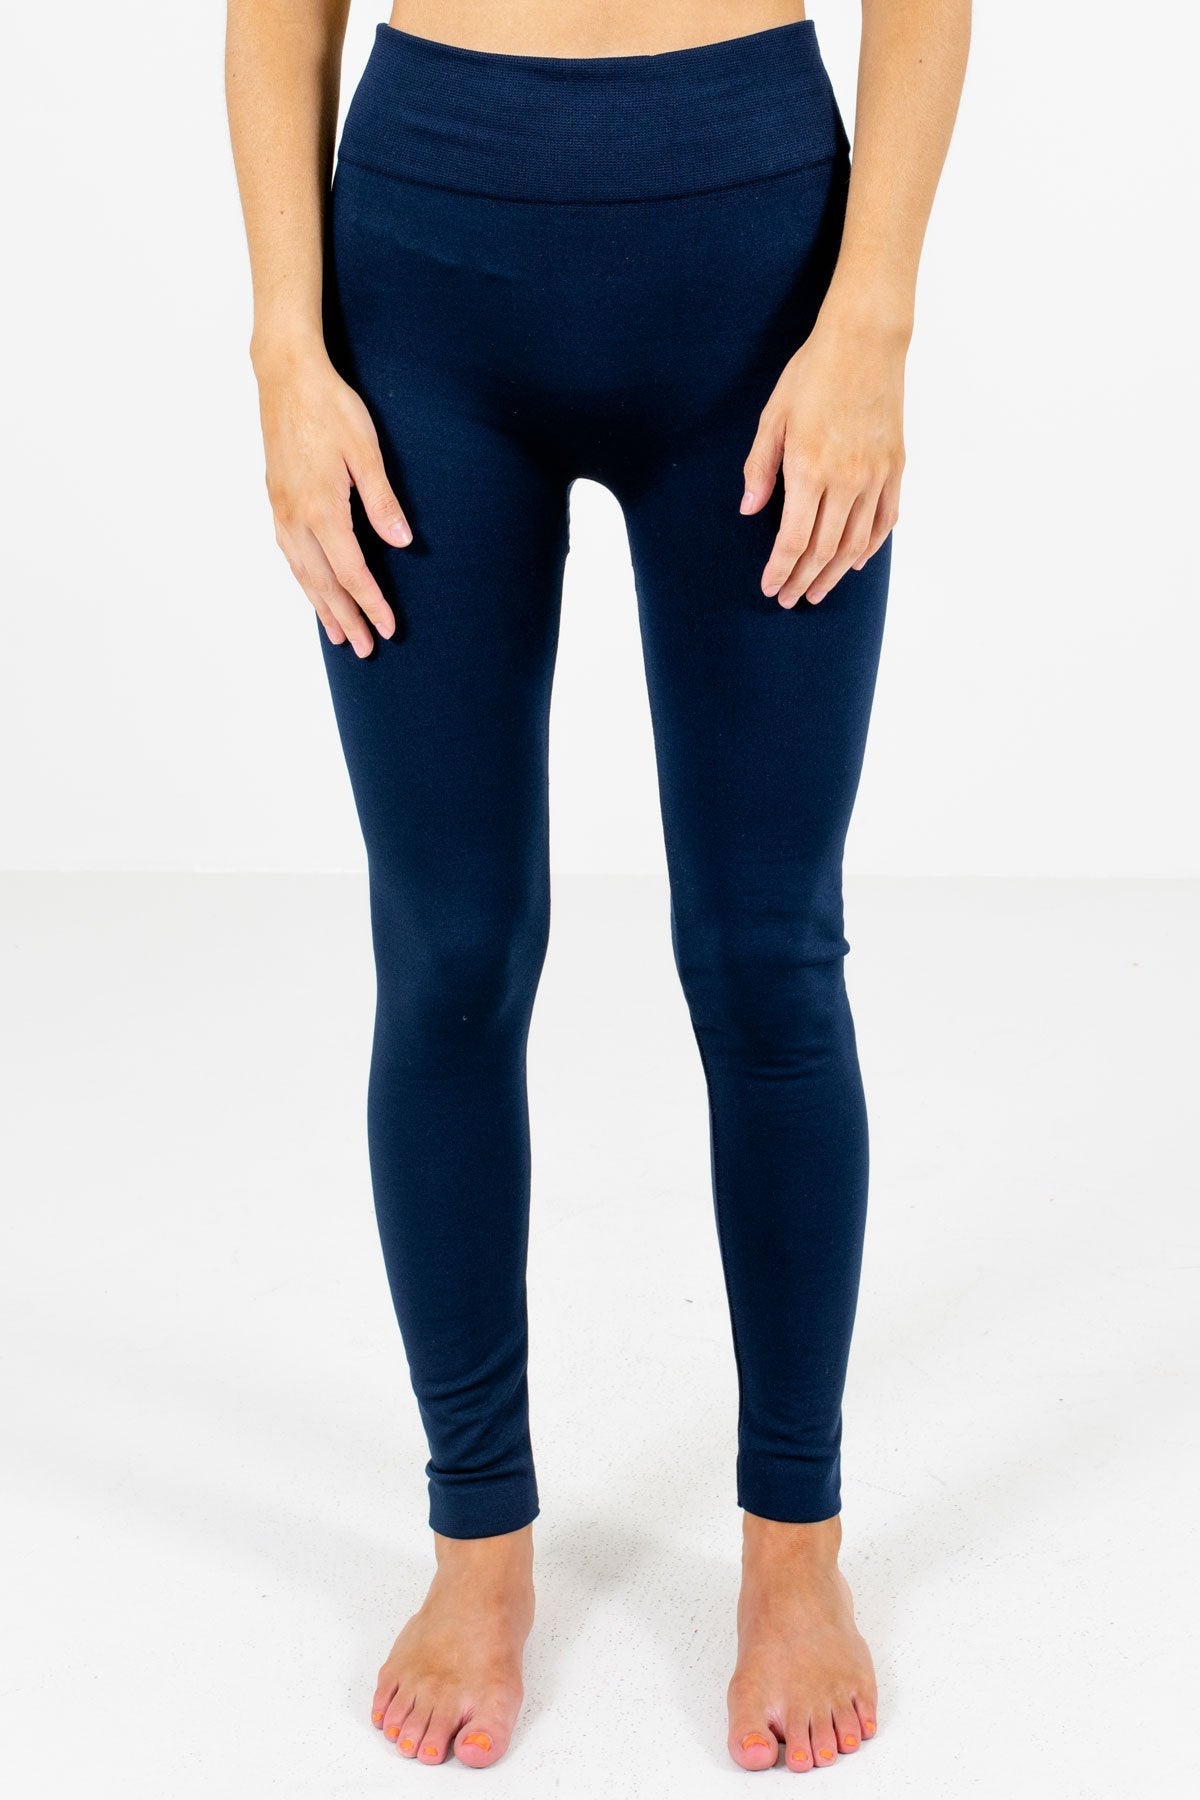 Navy Blue Fleece-Lined Boutique Leggings for Women